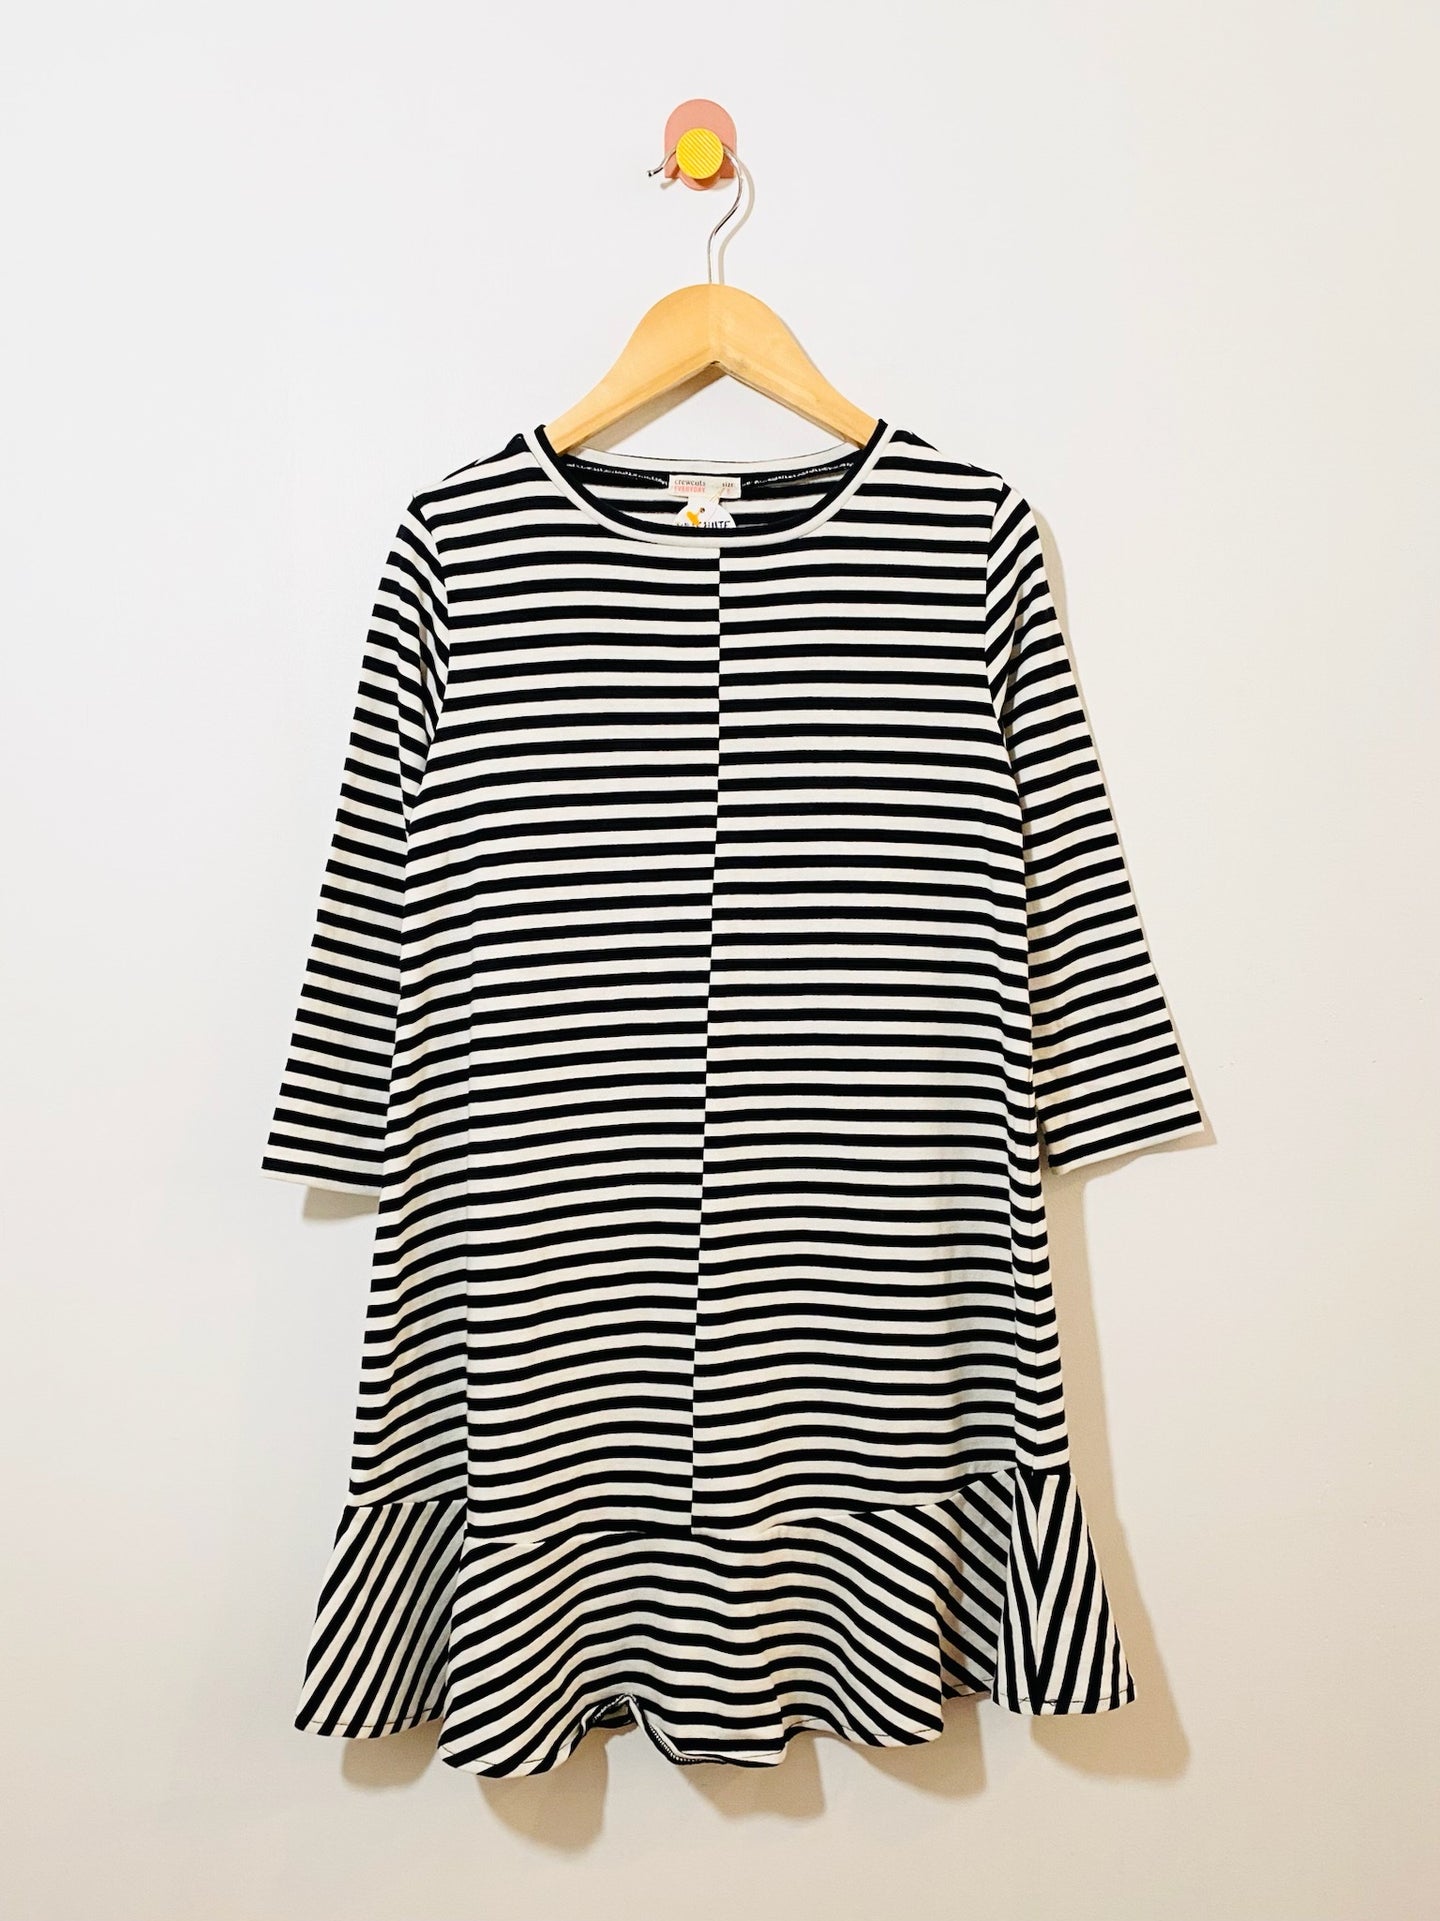 Crewcuts striped dress / 8Y